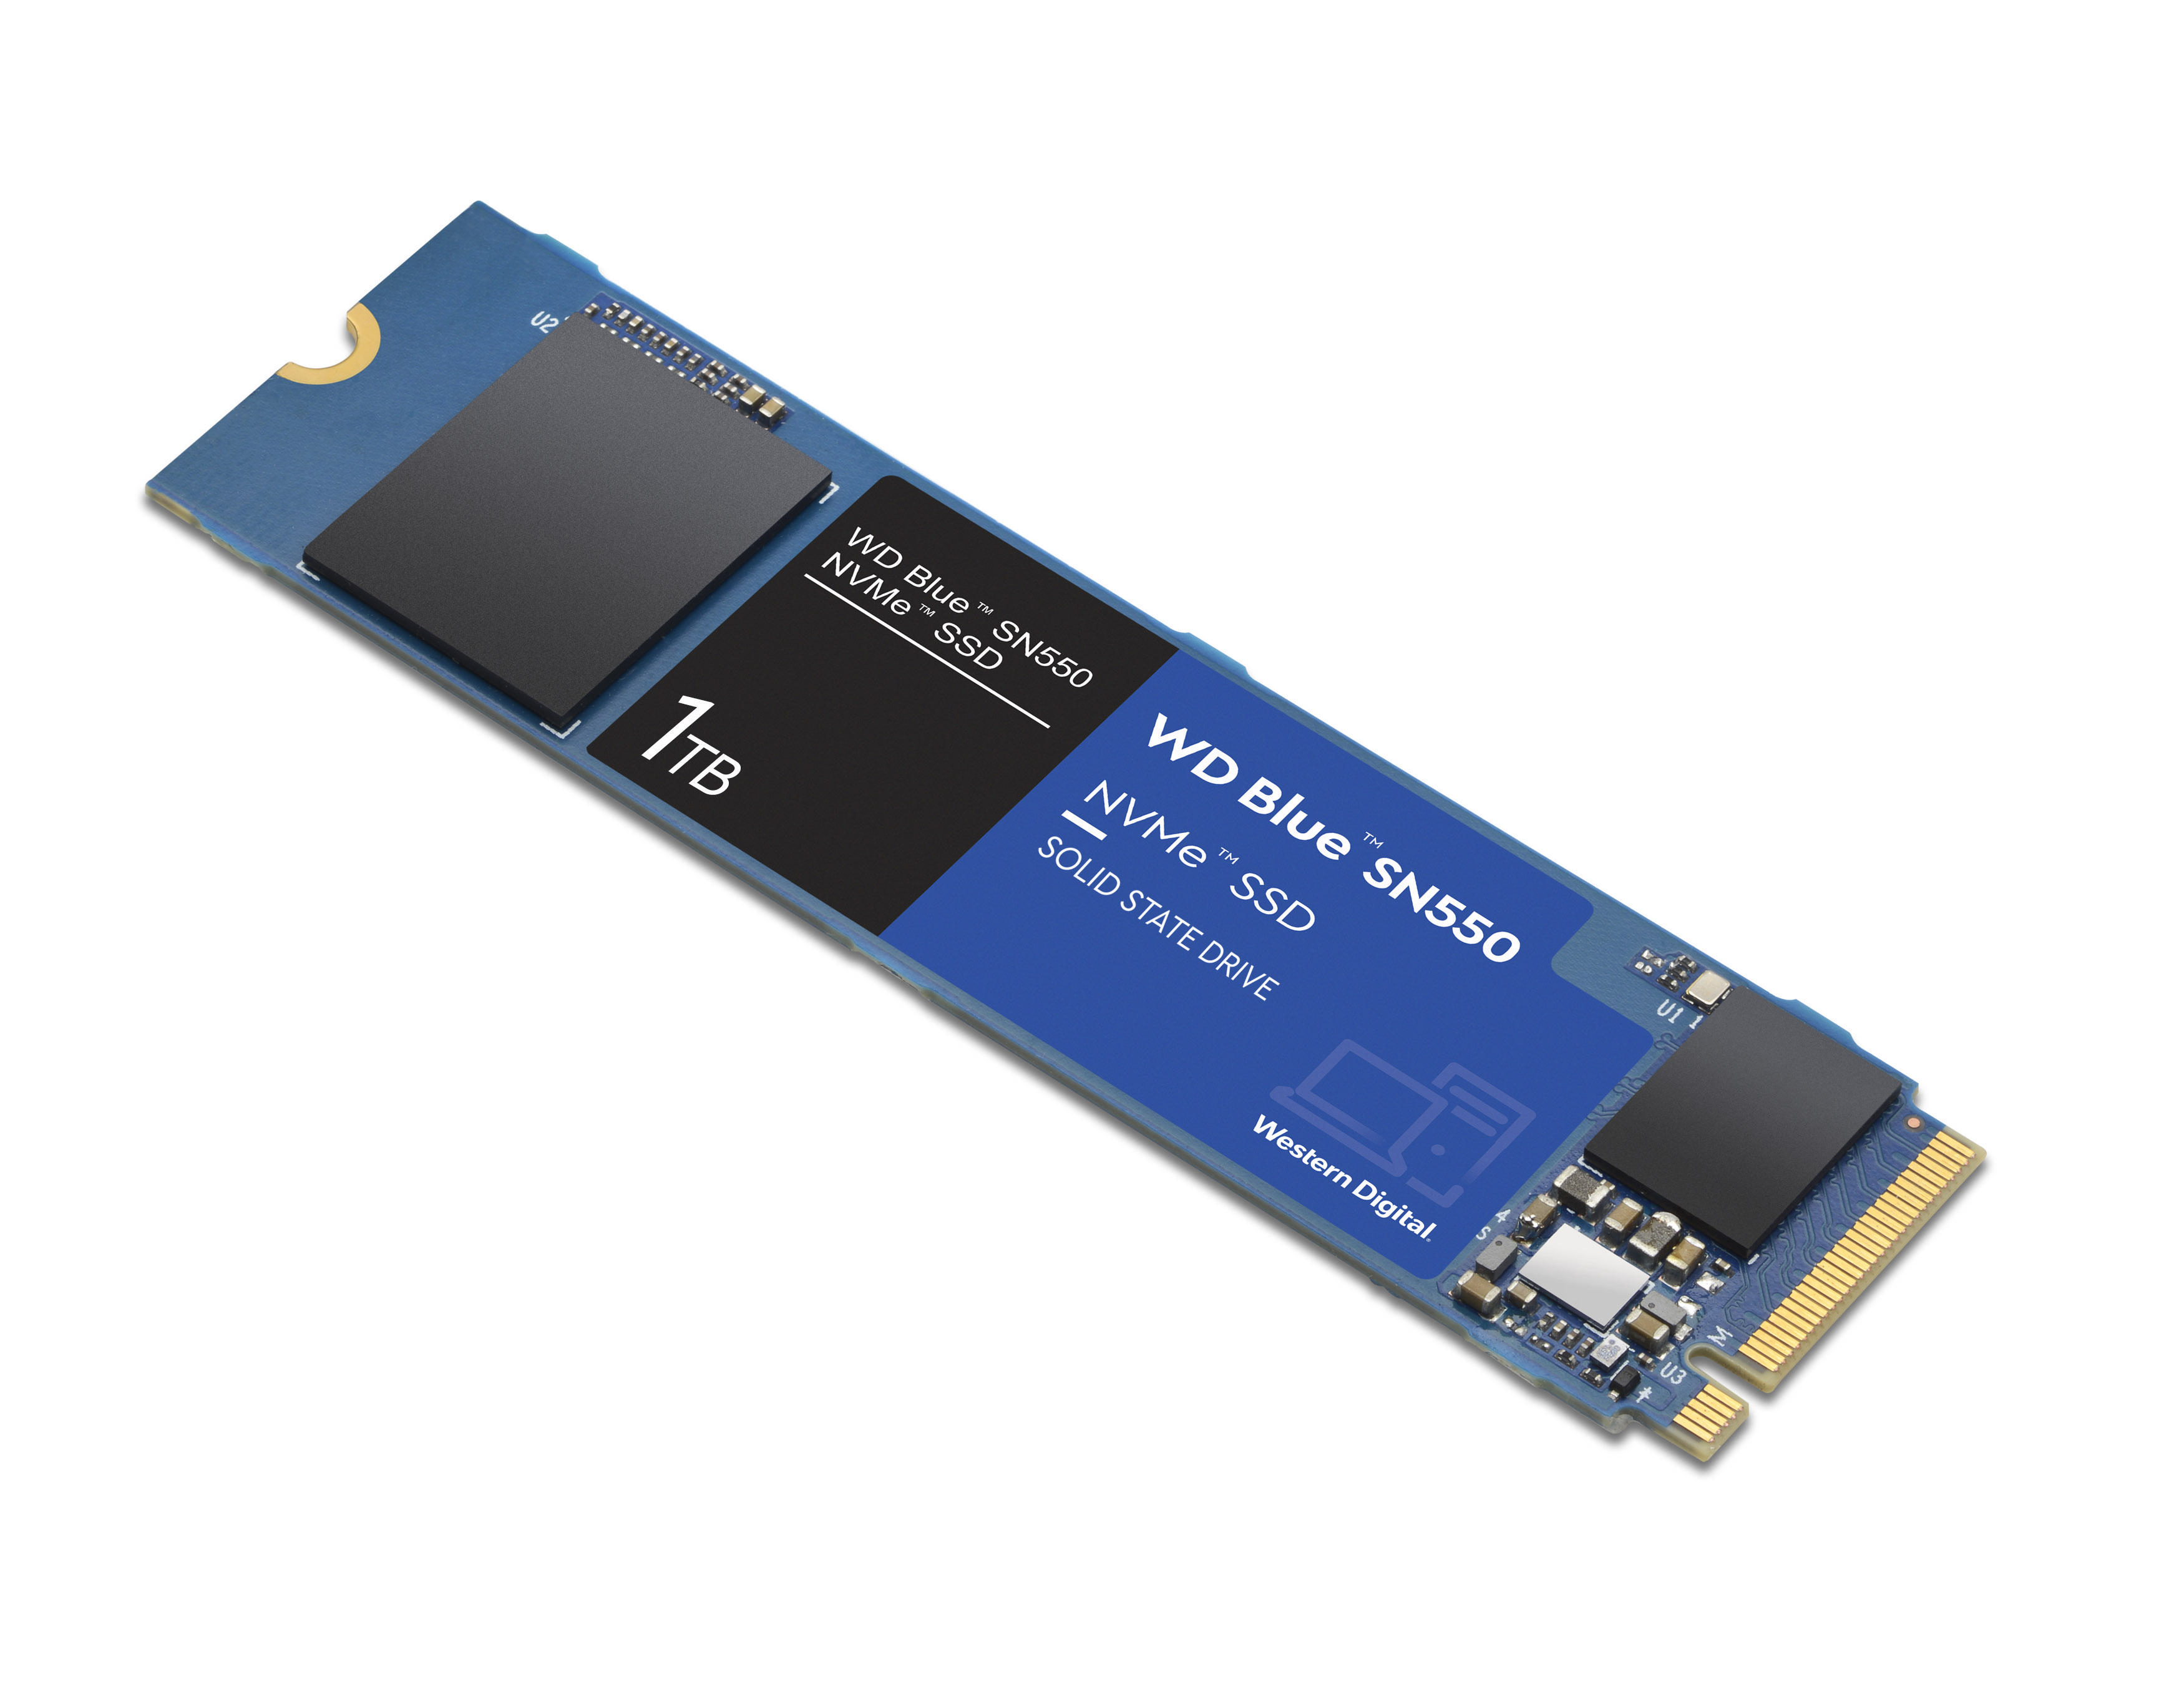 SSD intern WD Blue™ TB NVMe M.2 PCIe, SN550 via SSD Speicher, 1